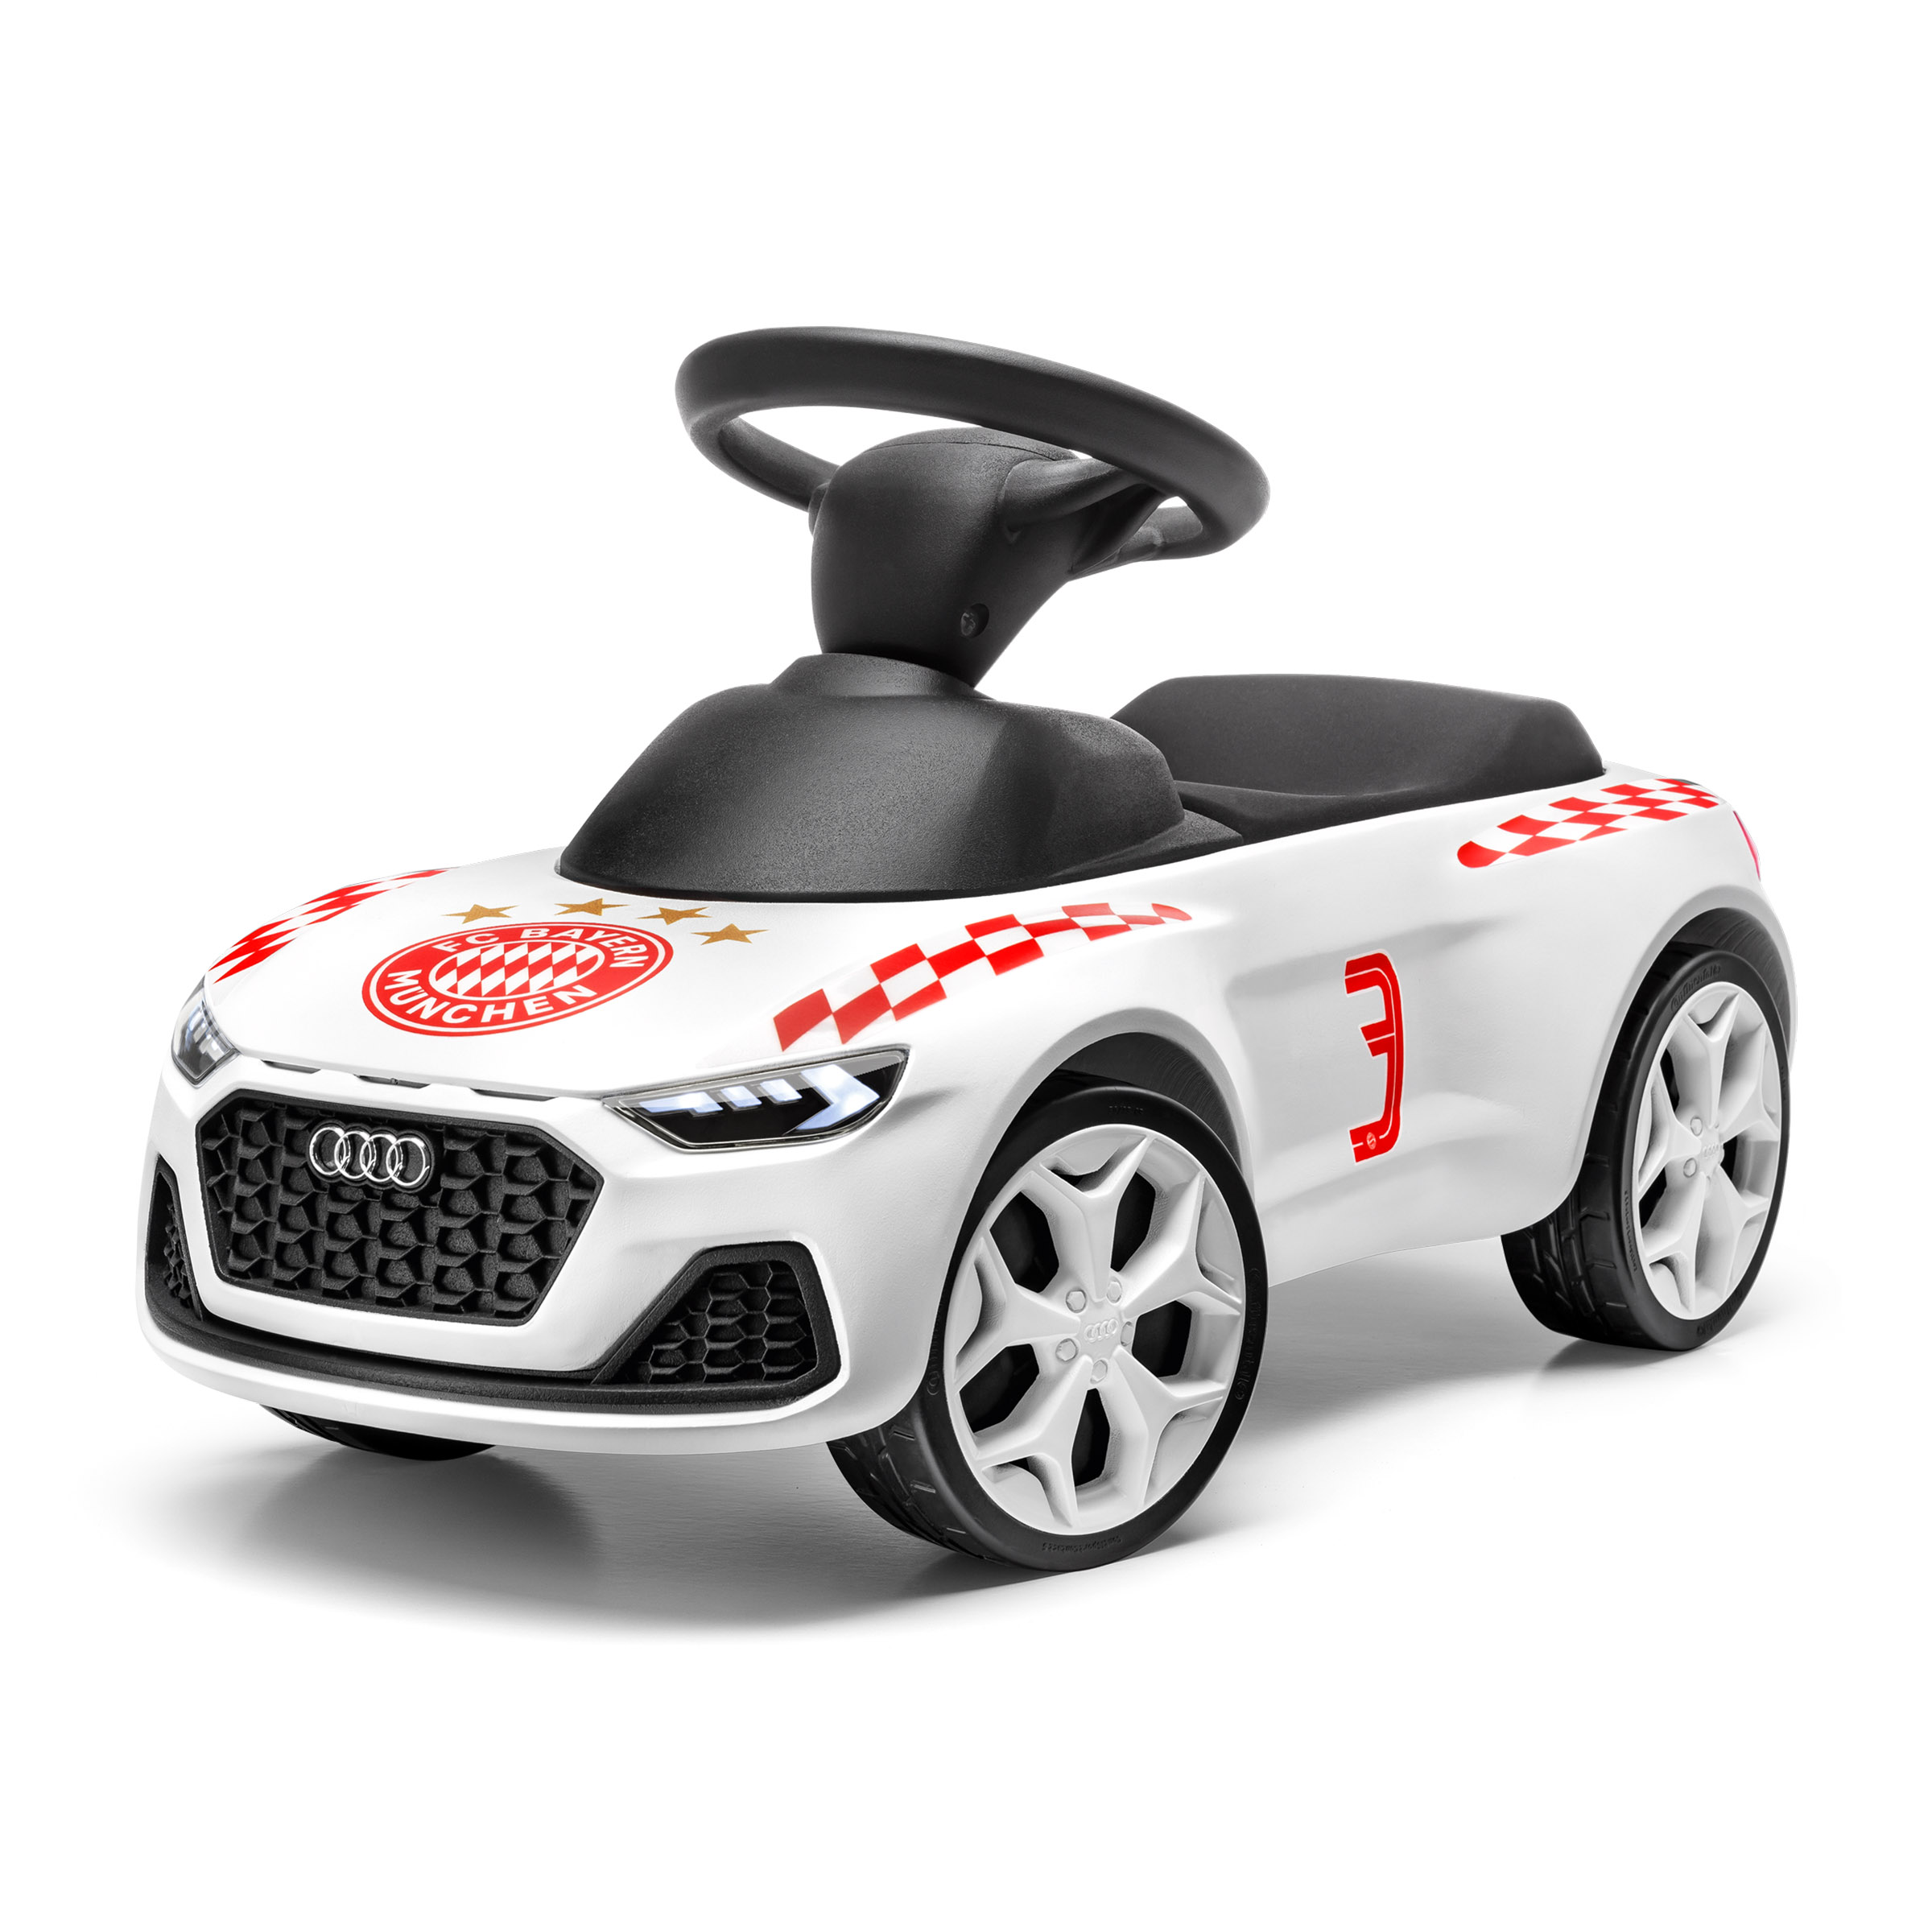 Детский автомобиль Audi Junior quattro FC Bayern Munchen, Kids, White 3202001200